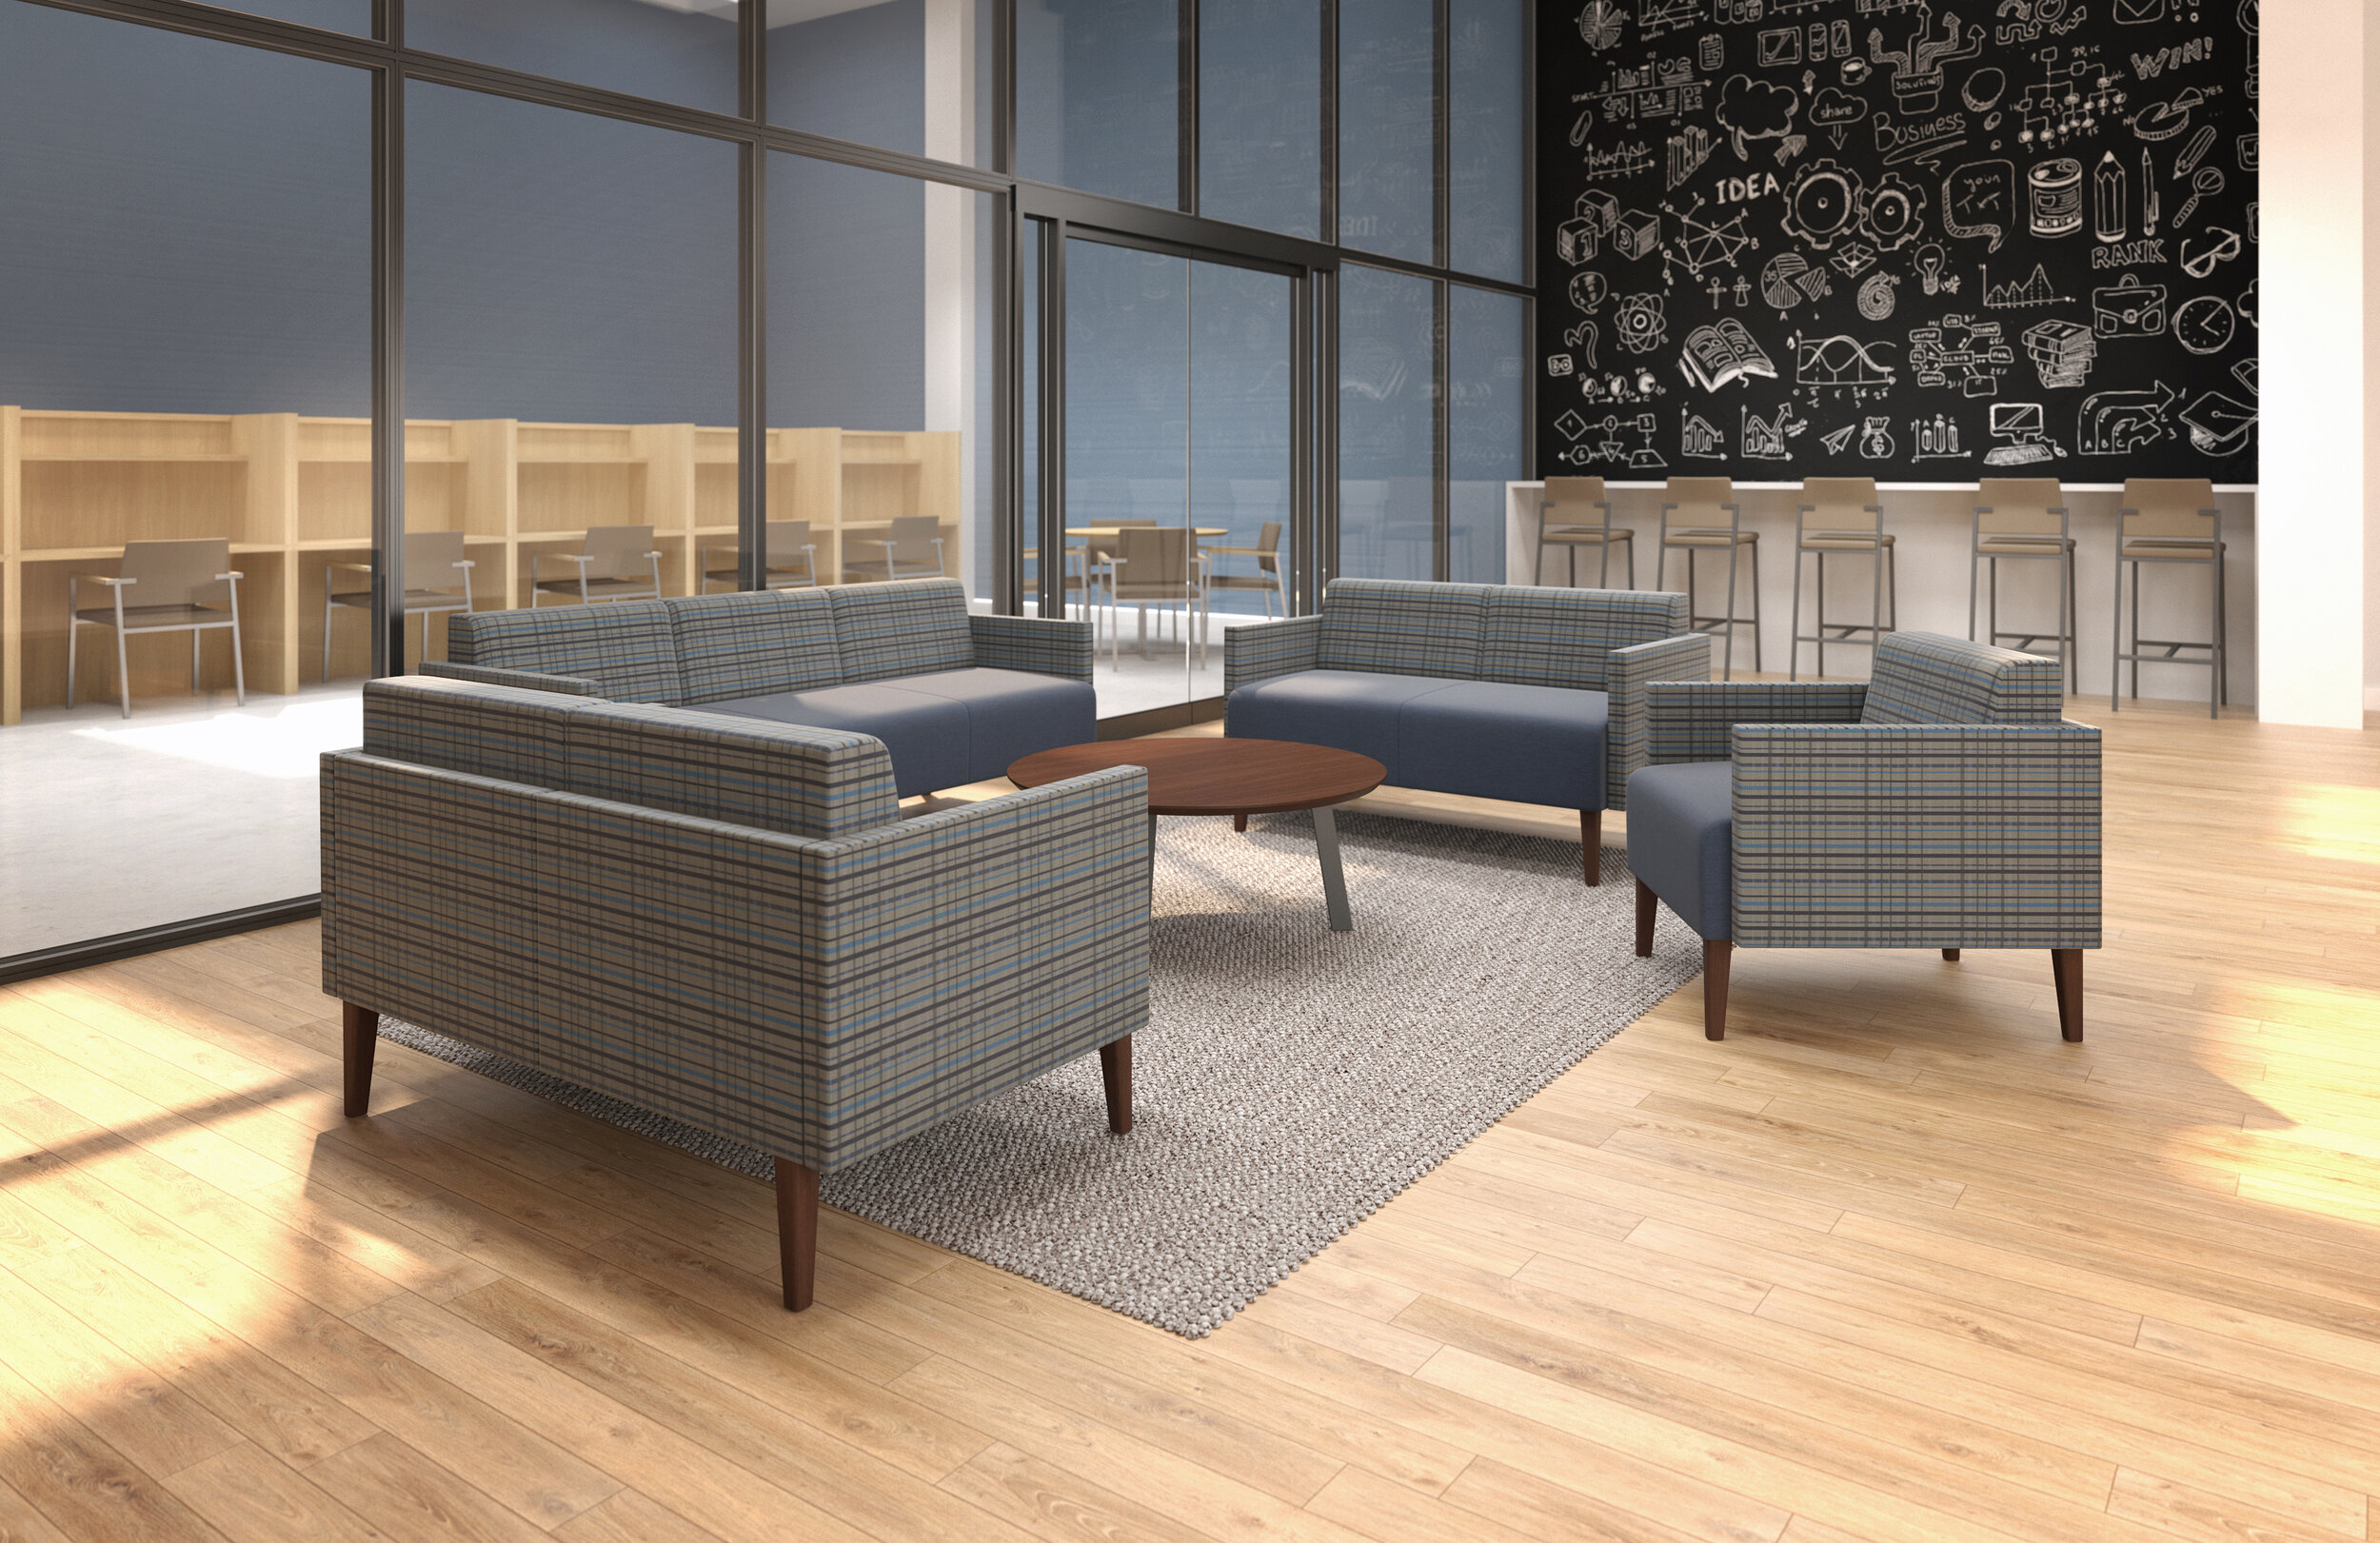 Luxe_Room2-Cam5_Final_HI+ USA Office Furniture.jpg